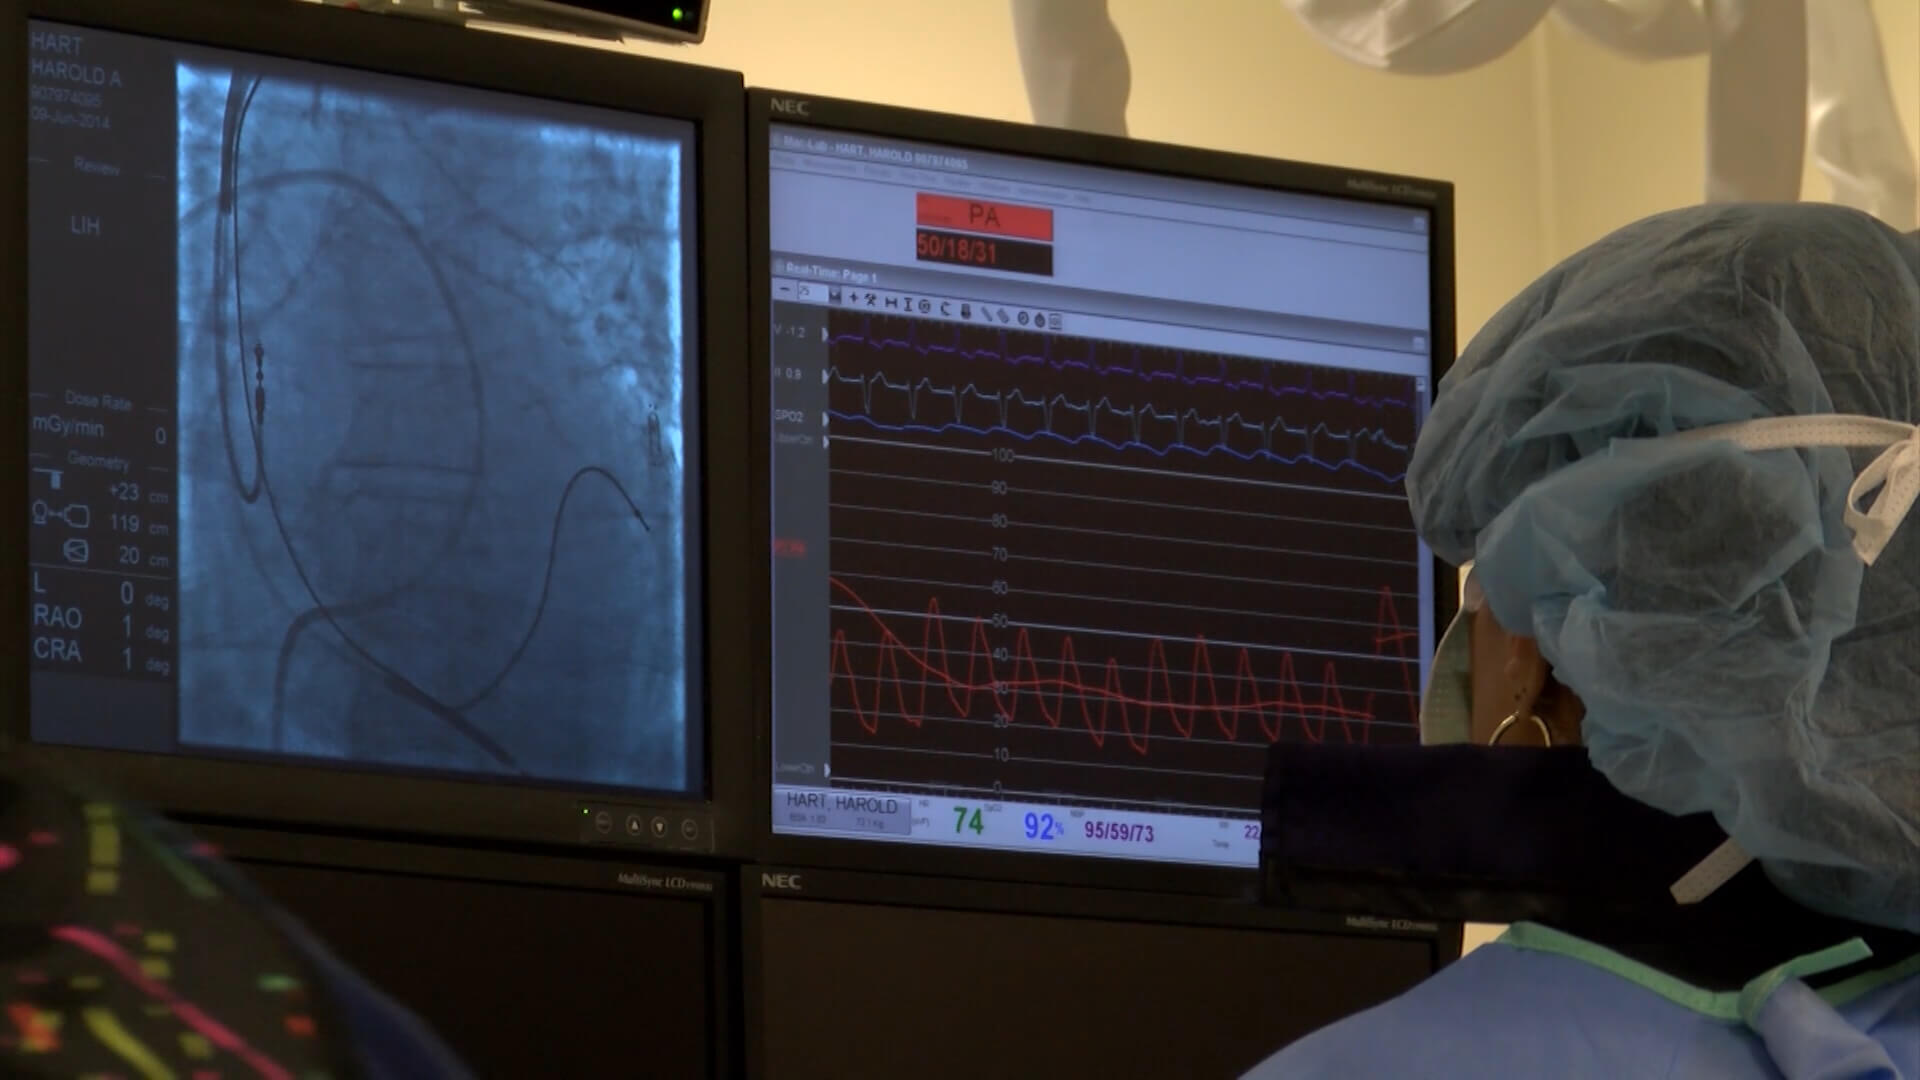 The CardioMEMS wireless heart monitor